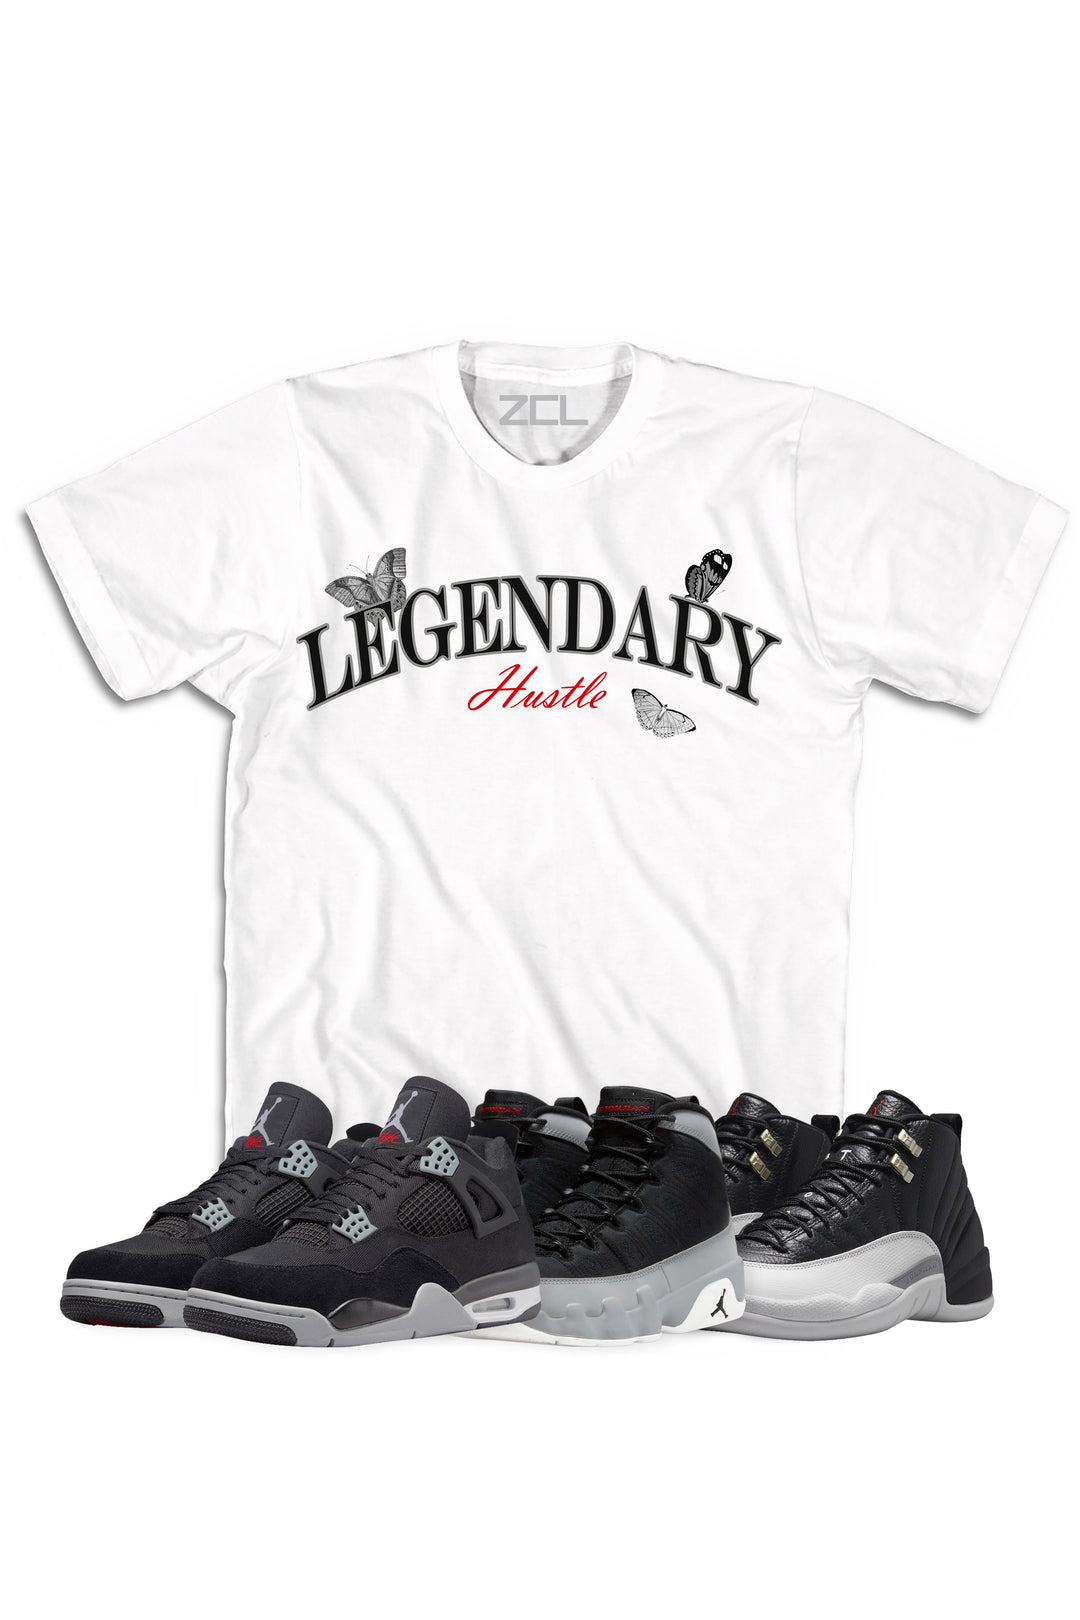 Air Jordan "Legendary" Tee Black Canvas - Zamage